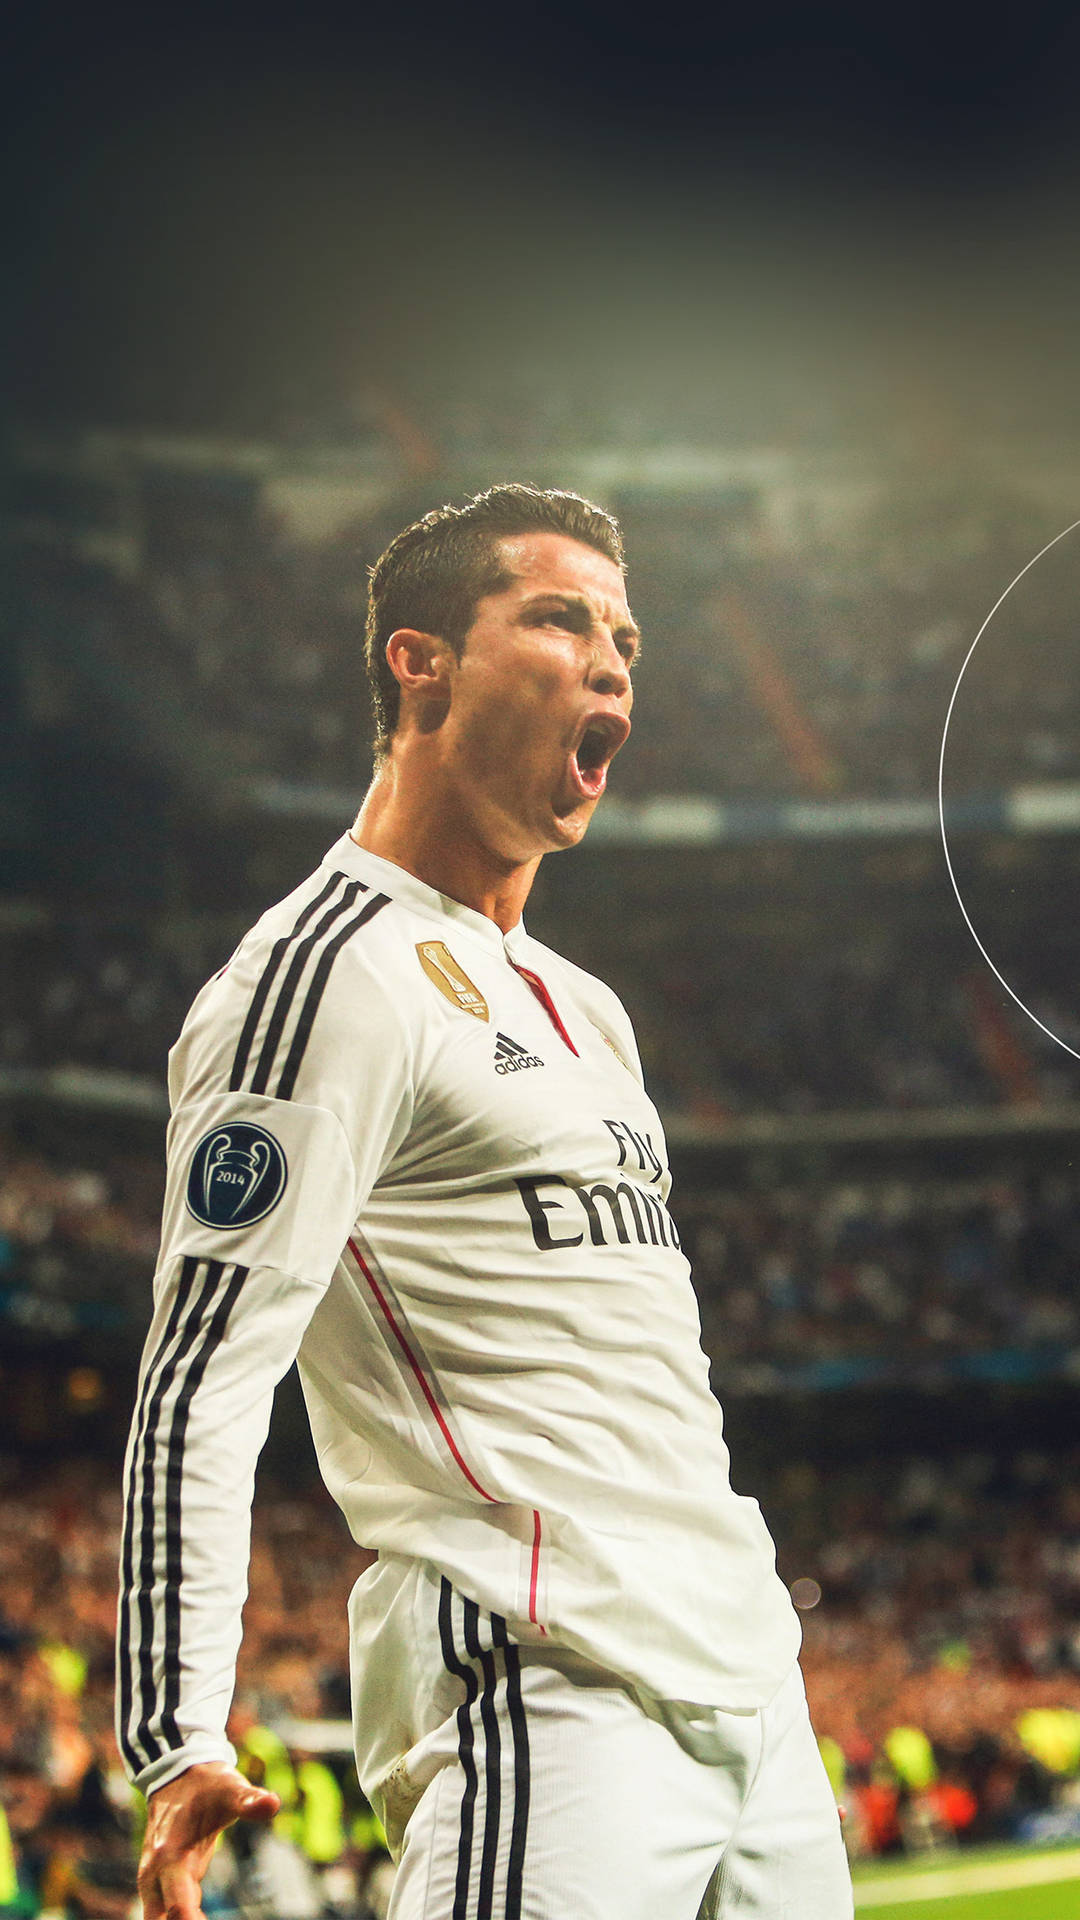 Portuguese Professional Fooballer Cristiano Ronaldo SIU Sports iPhone Wallpaper